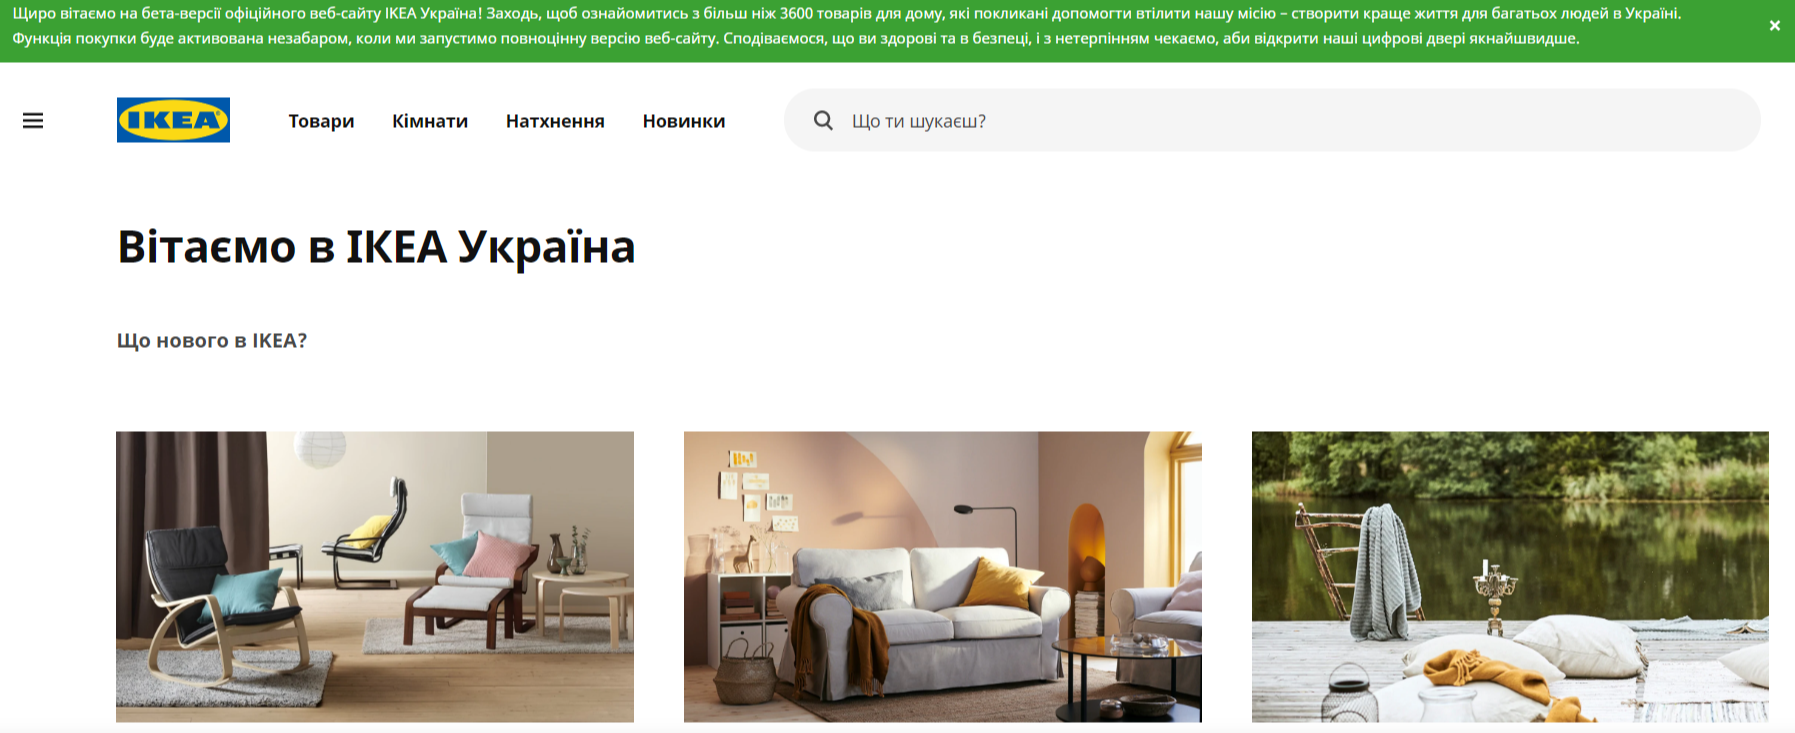 ИКЕА в Украине откроет онлайн-магазин "в скором времени". Скриншот: ikea.com